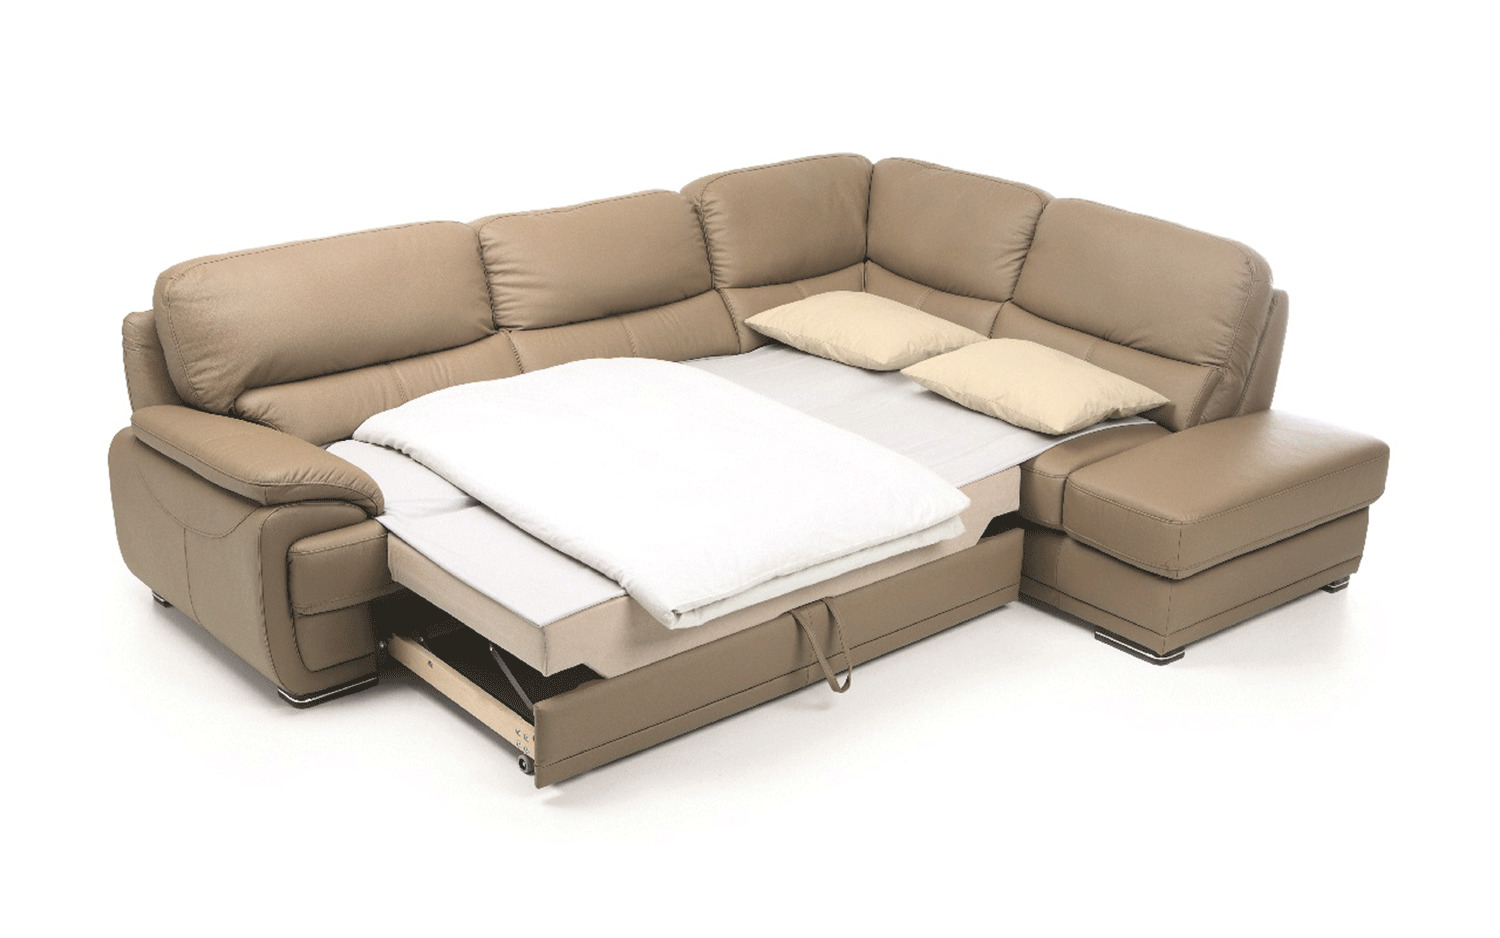 leather sectional sleeper sofa canada